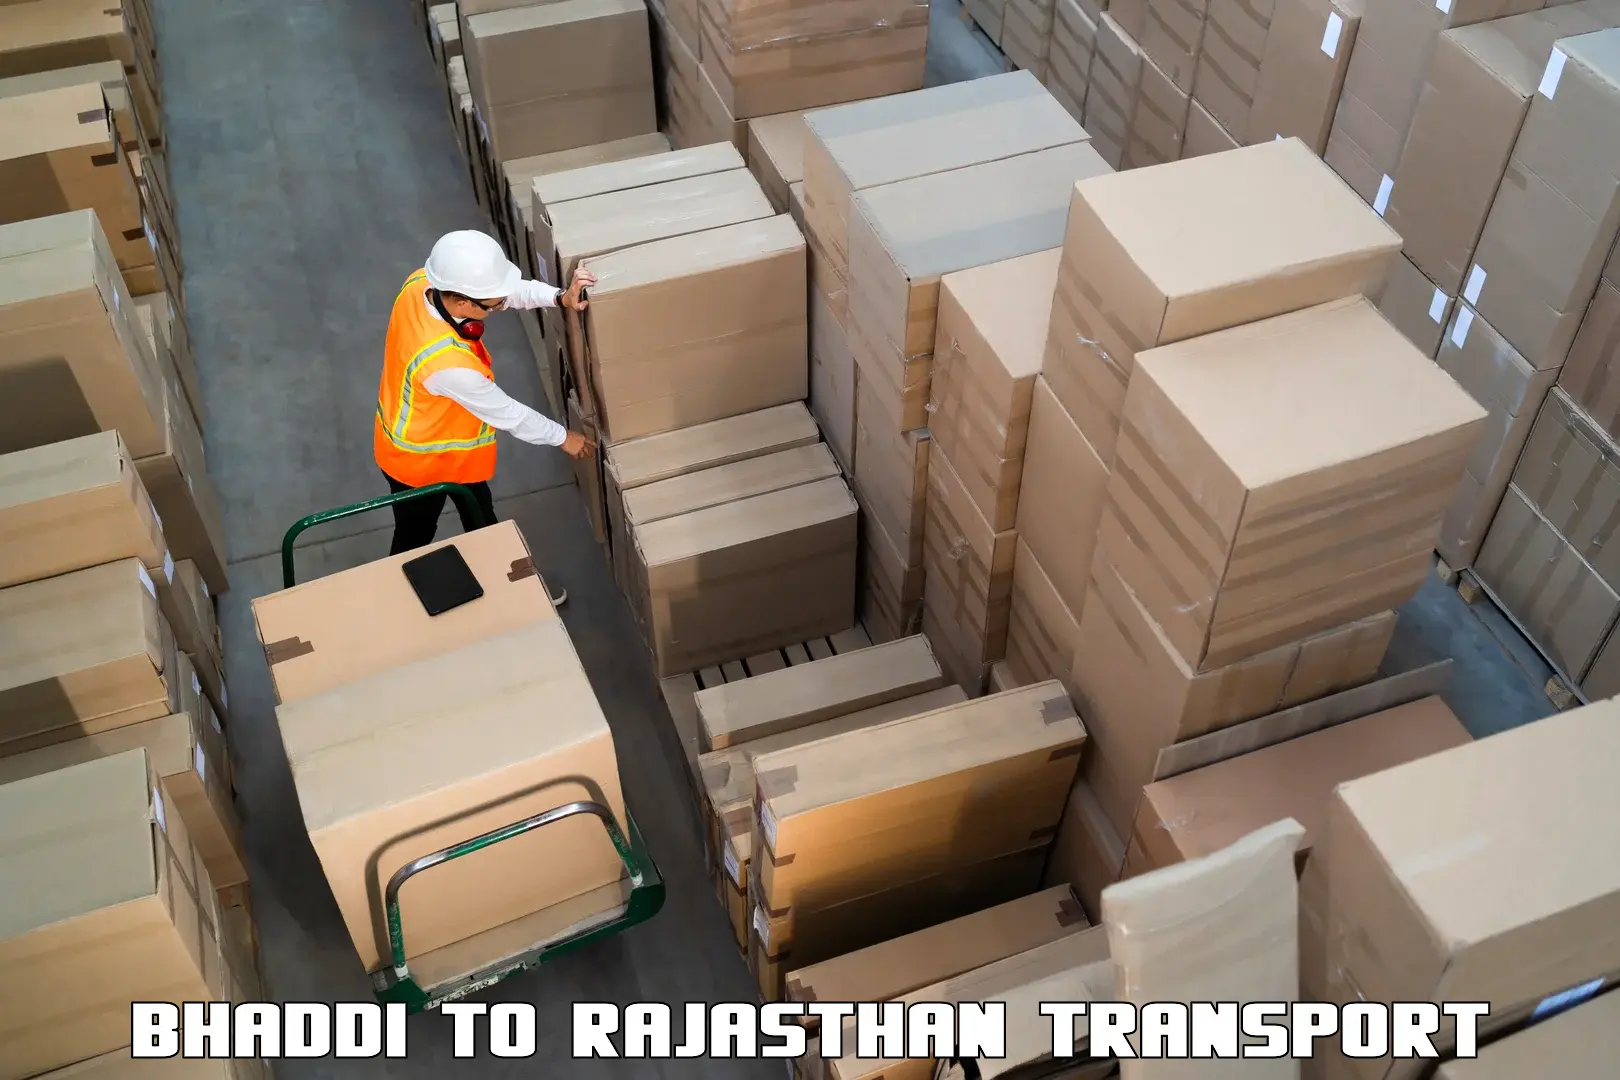 International cargo transportation services Bhaddi to Jodhpur